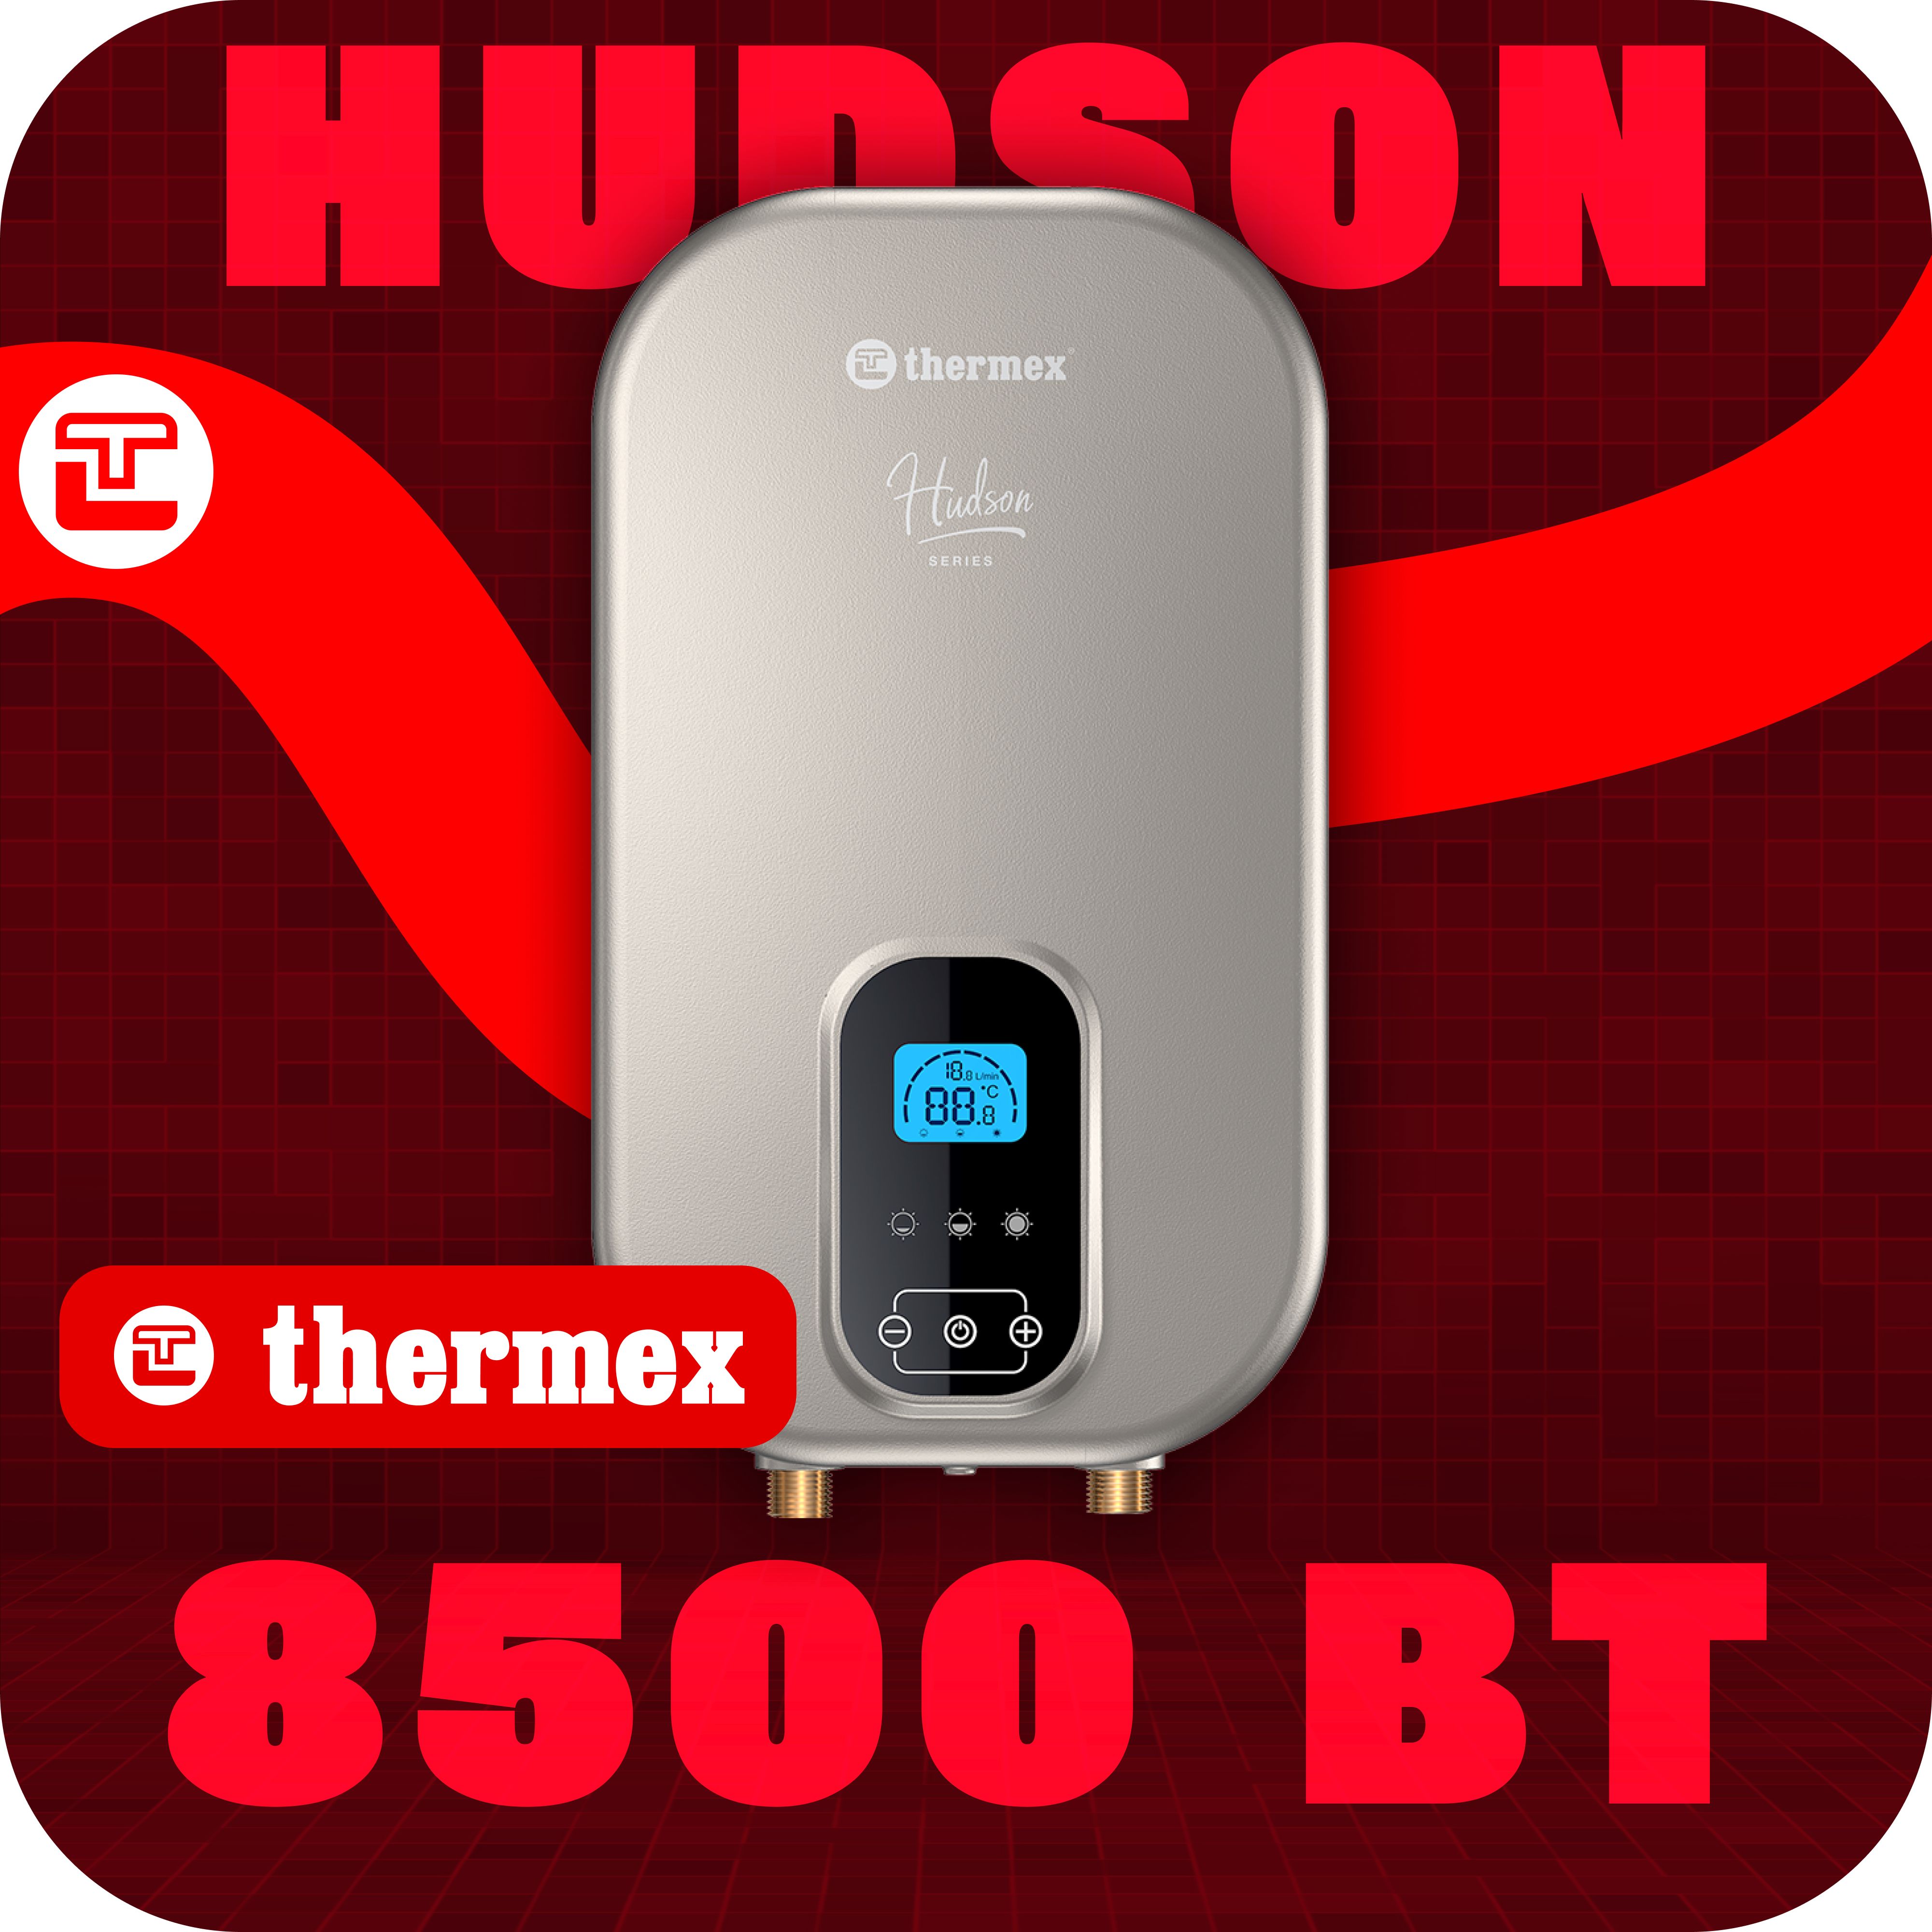 Thermex hudson 7000